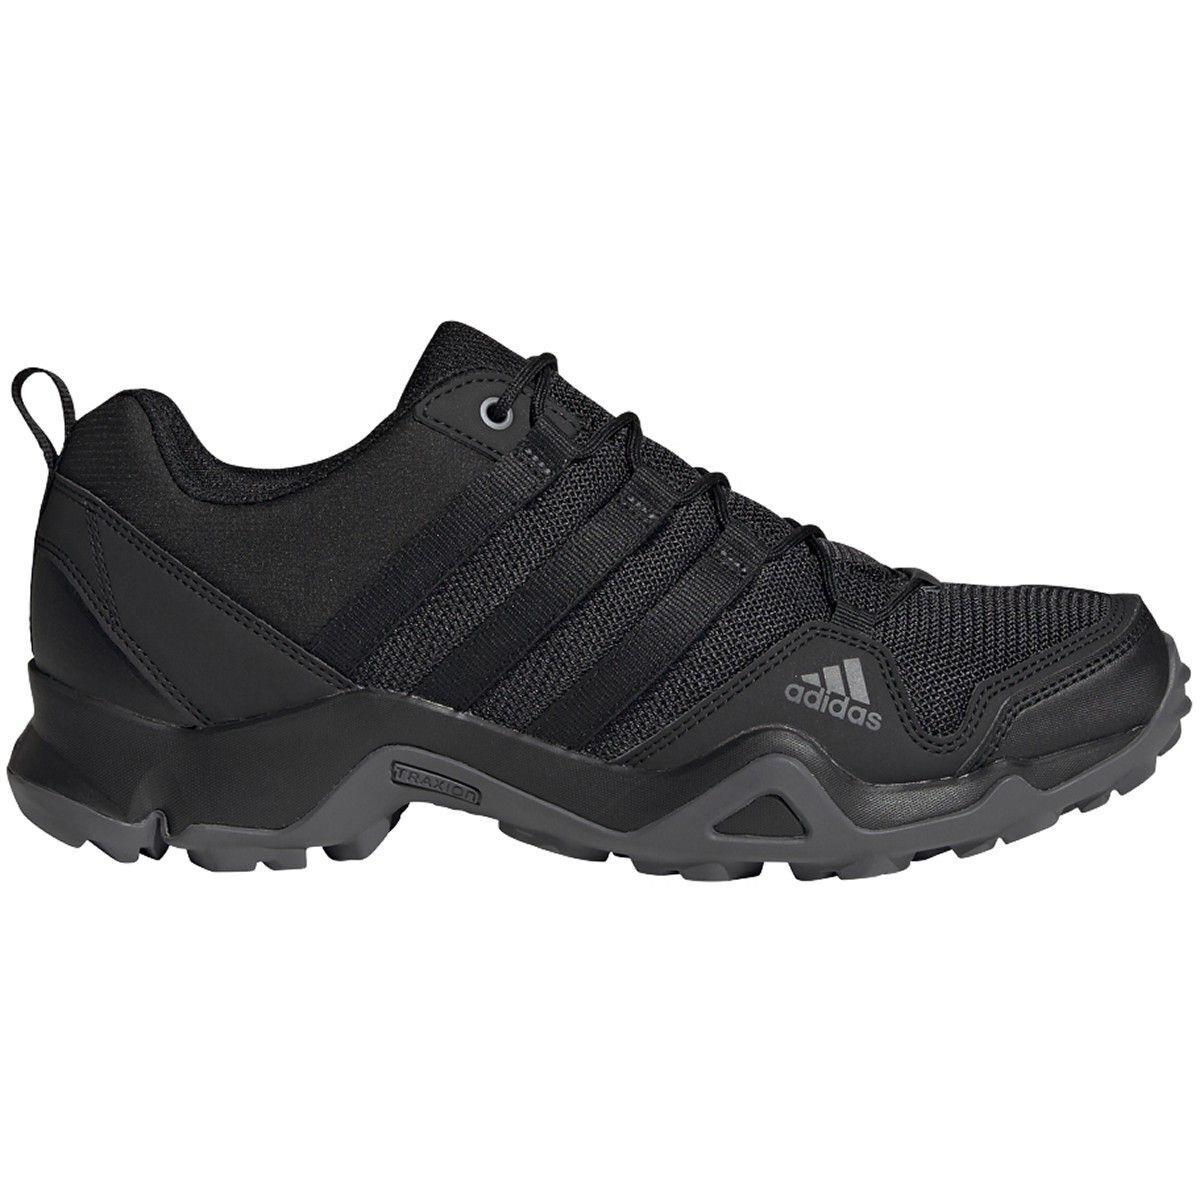 Adidas AX2S Men s Hiking Shoes Sneakers Black / Dark Grey 587